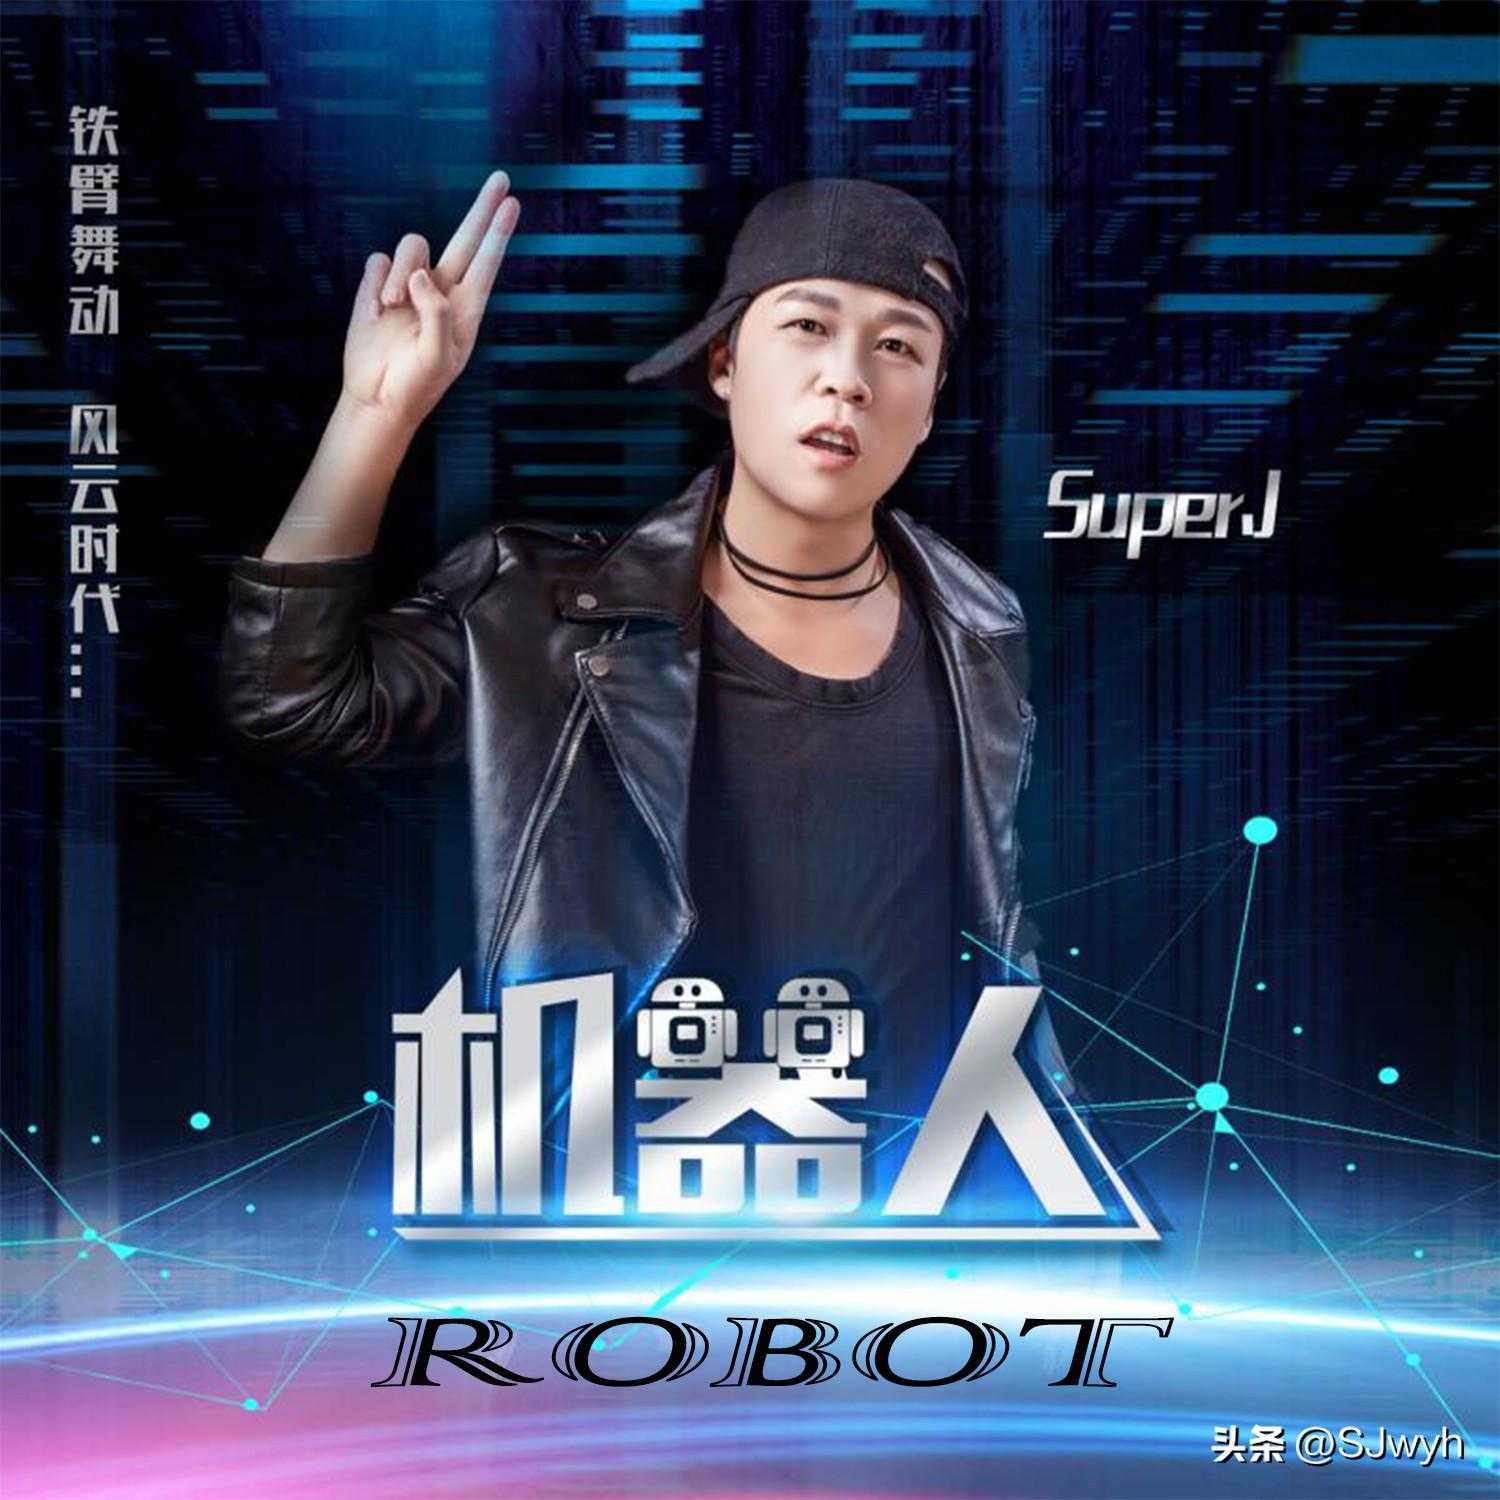 Super.J智能时代神曲《ROBOT》英文版和中英文混合版已全球发布